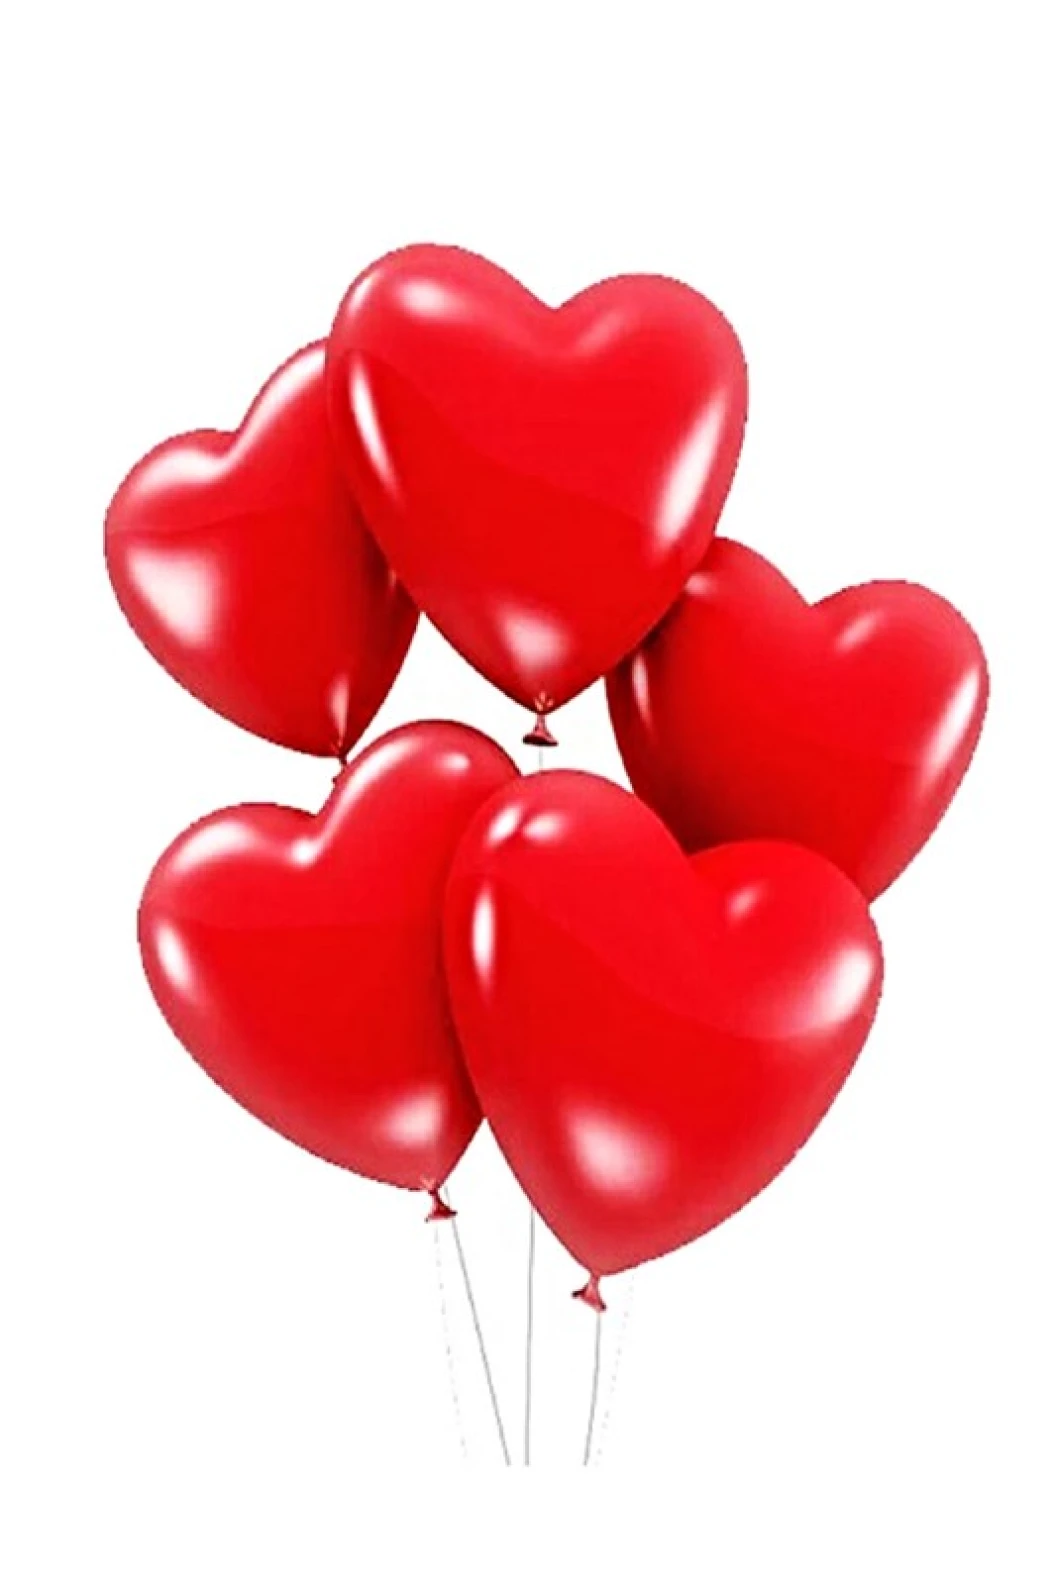 5 Heart Shaped Balloons - image №1